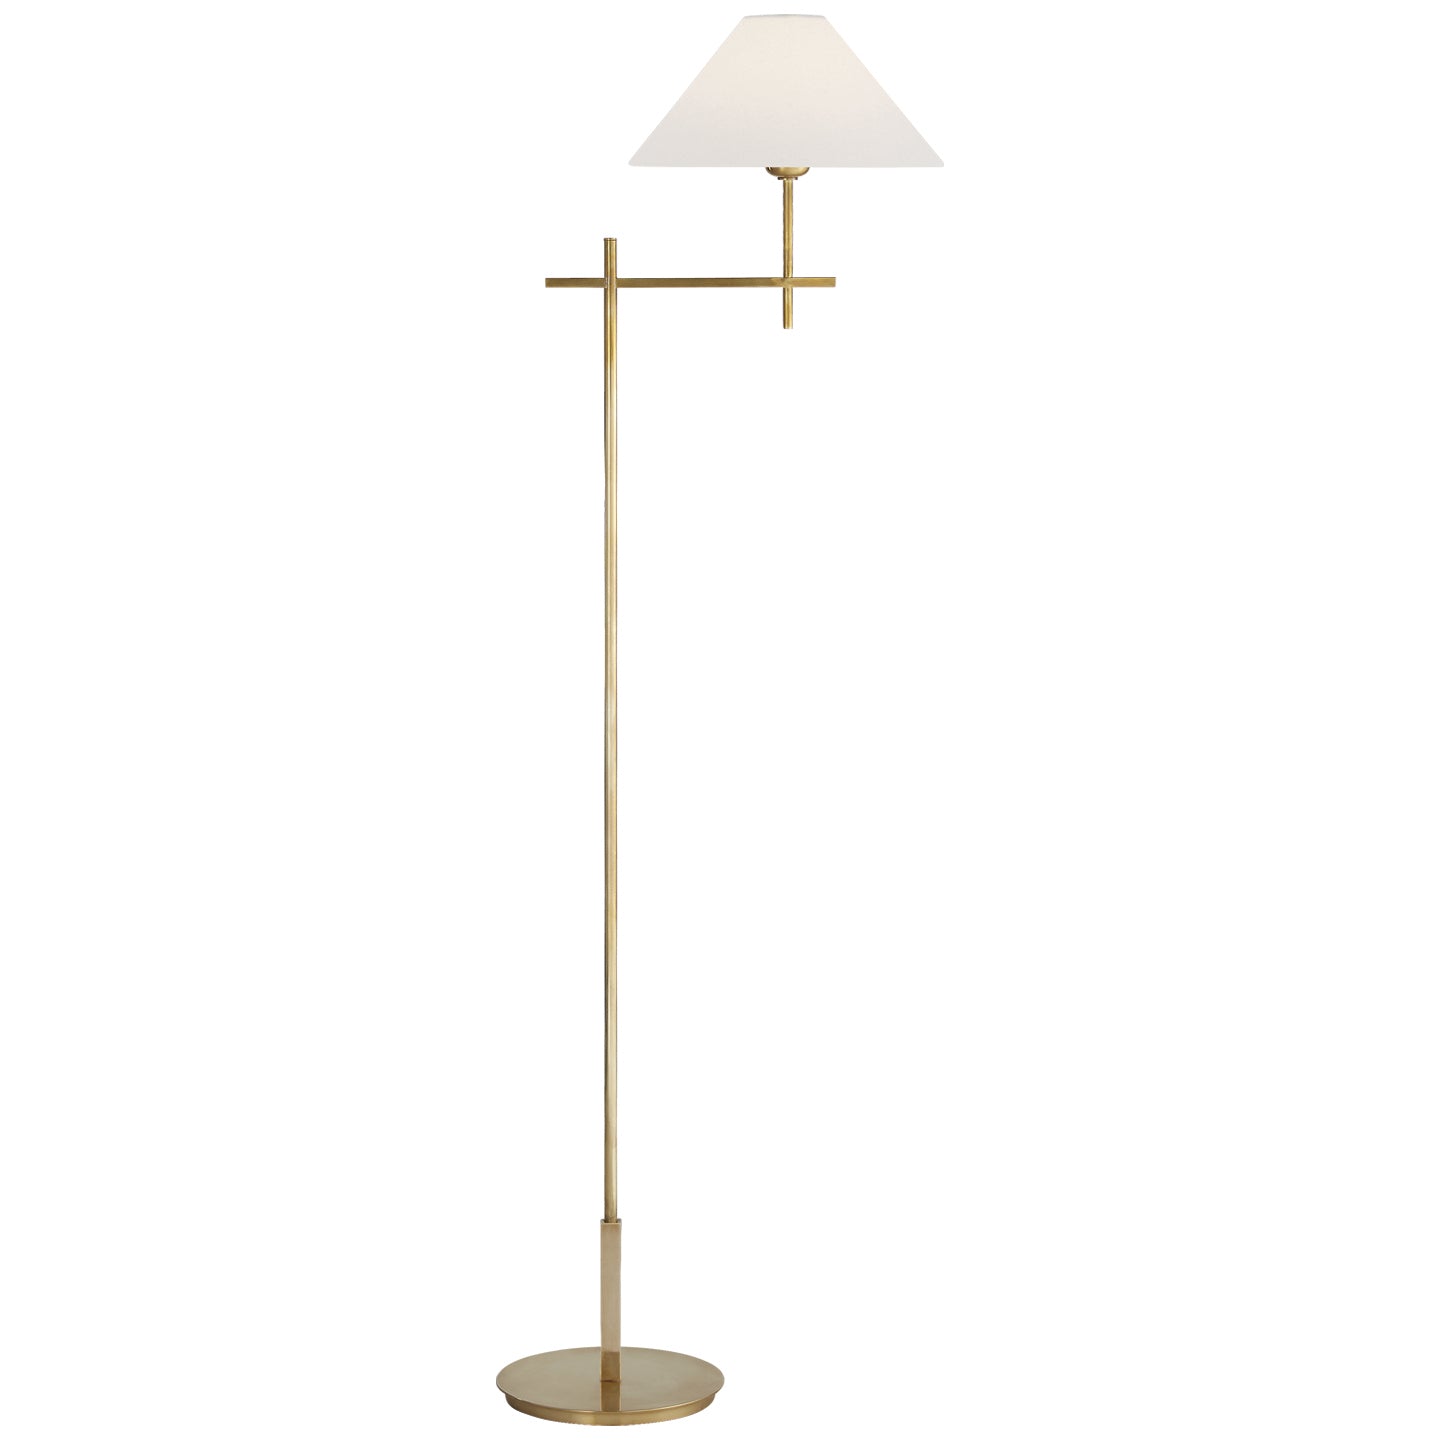 Visual Comfort Signature - SP 1023HAB-L - One Light Floor Lamp - Hackney - Hand-Rubbed Antique Brass